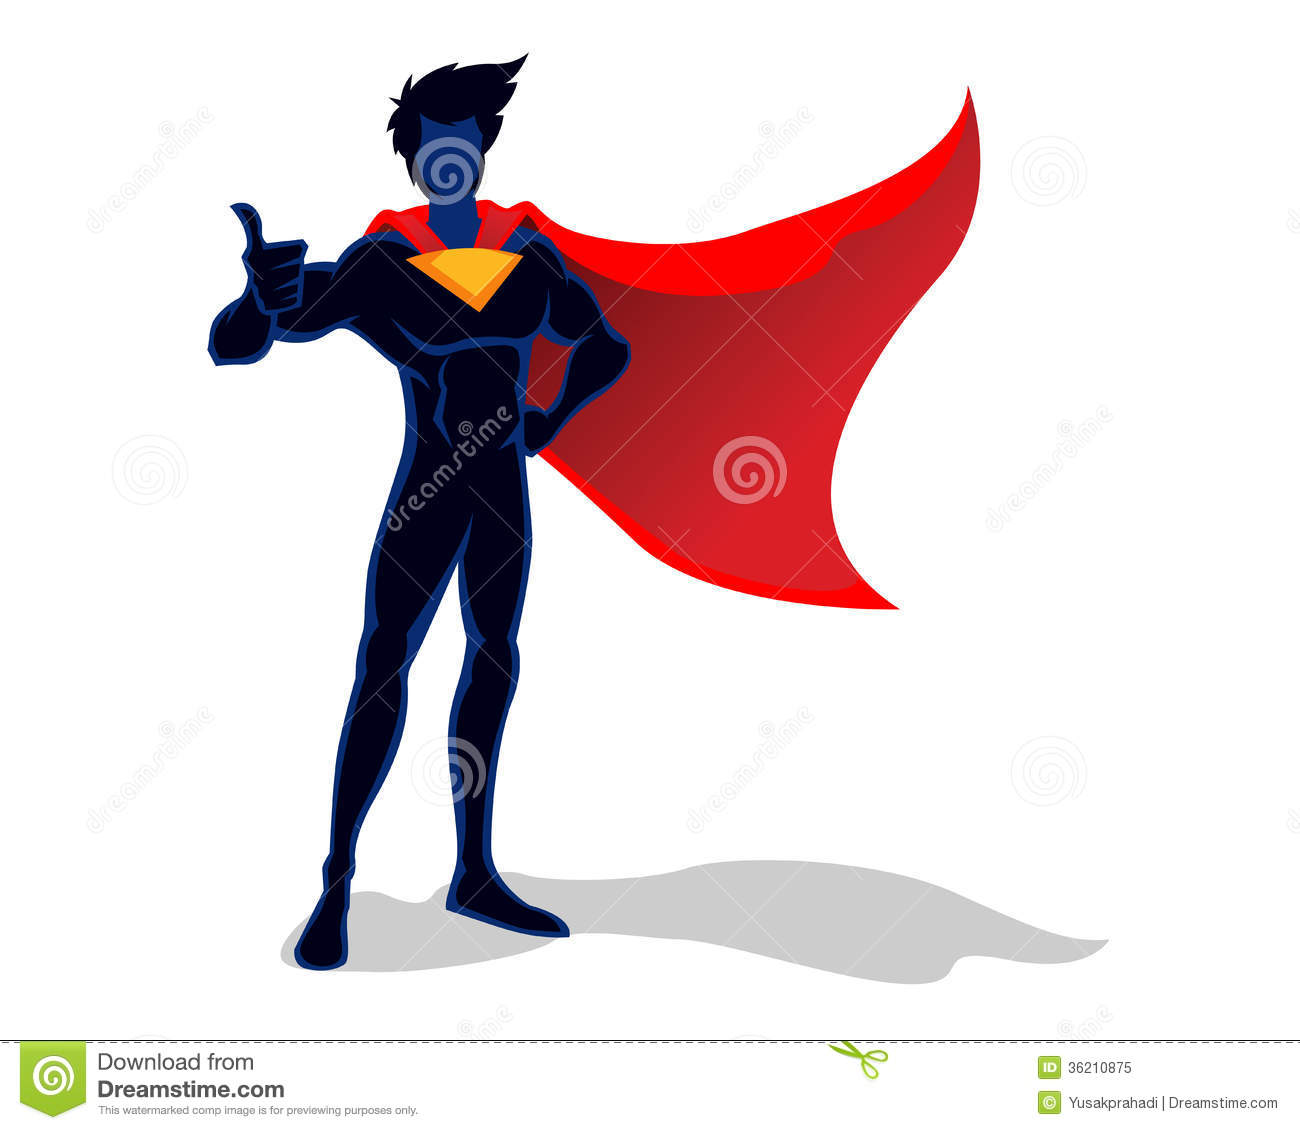 Super Hero with Cape